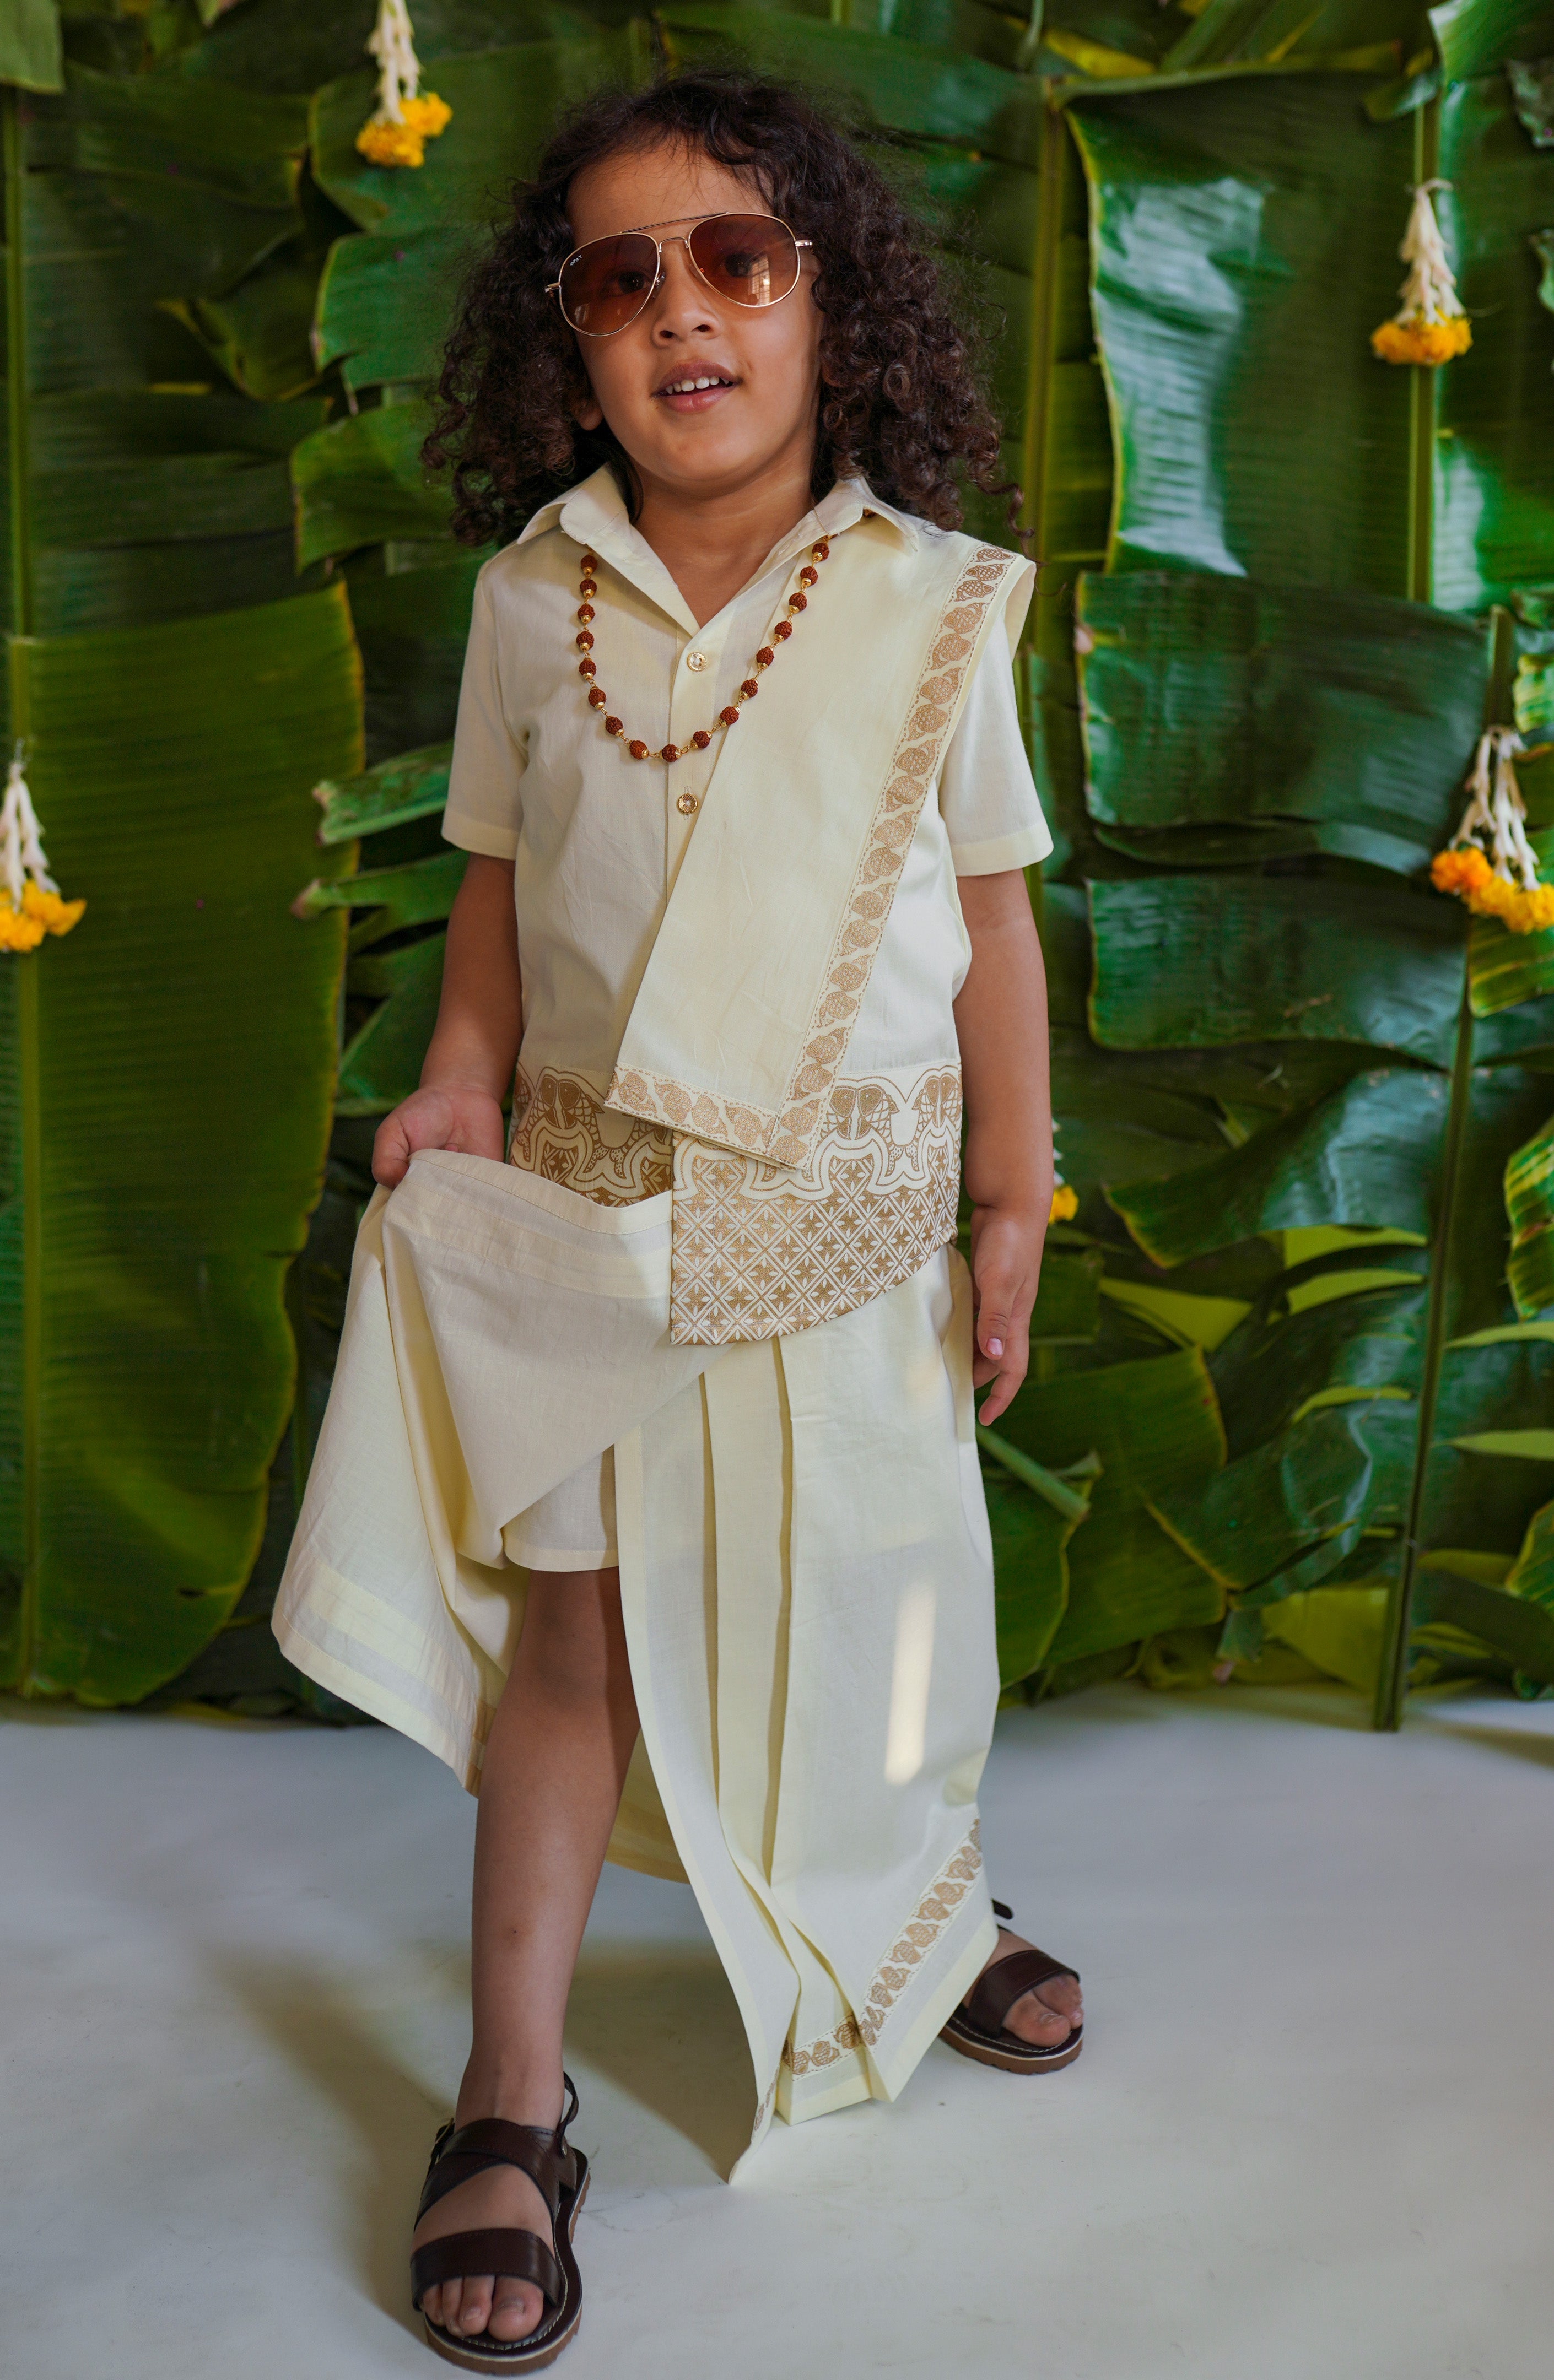 Buy COMRATE New south Indian traditional Green pattu pavadai Jecquard  Lehenga choli for girls dress at Amazon.in